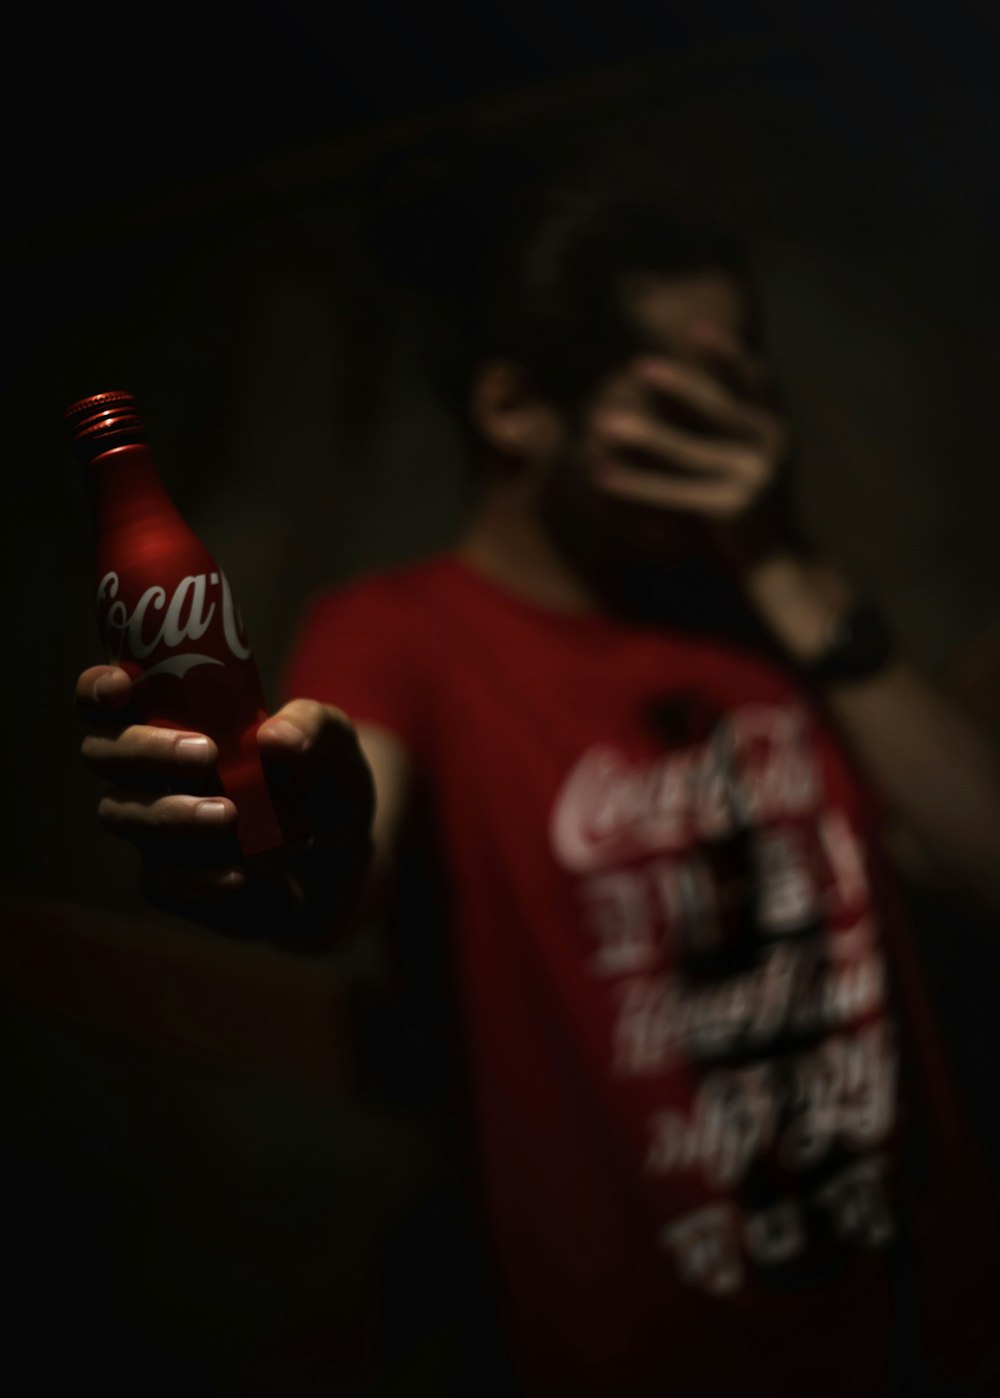 man holding Coca-Cola bottle